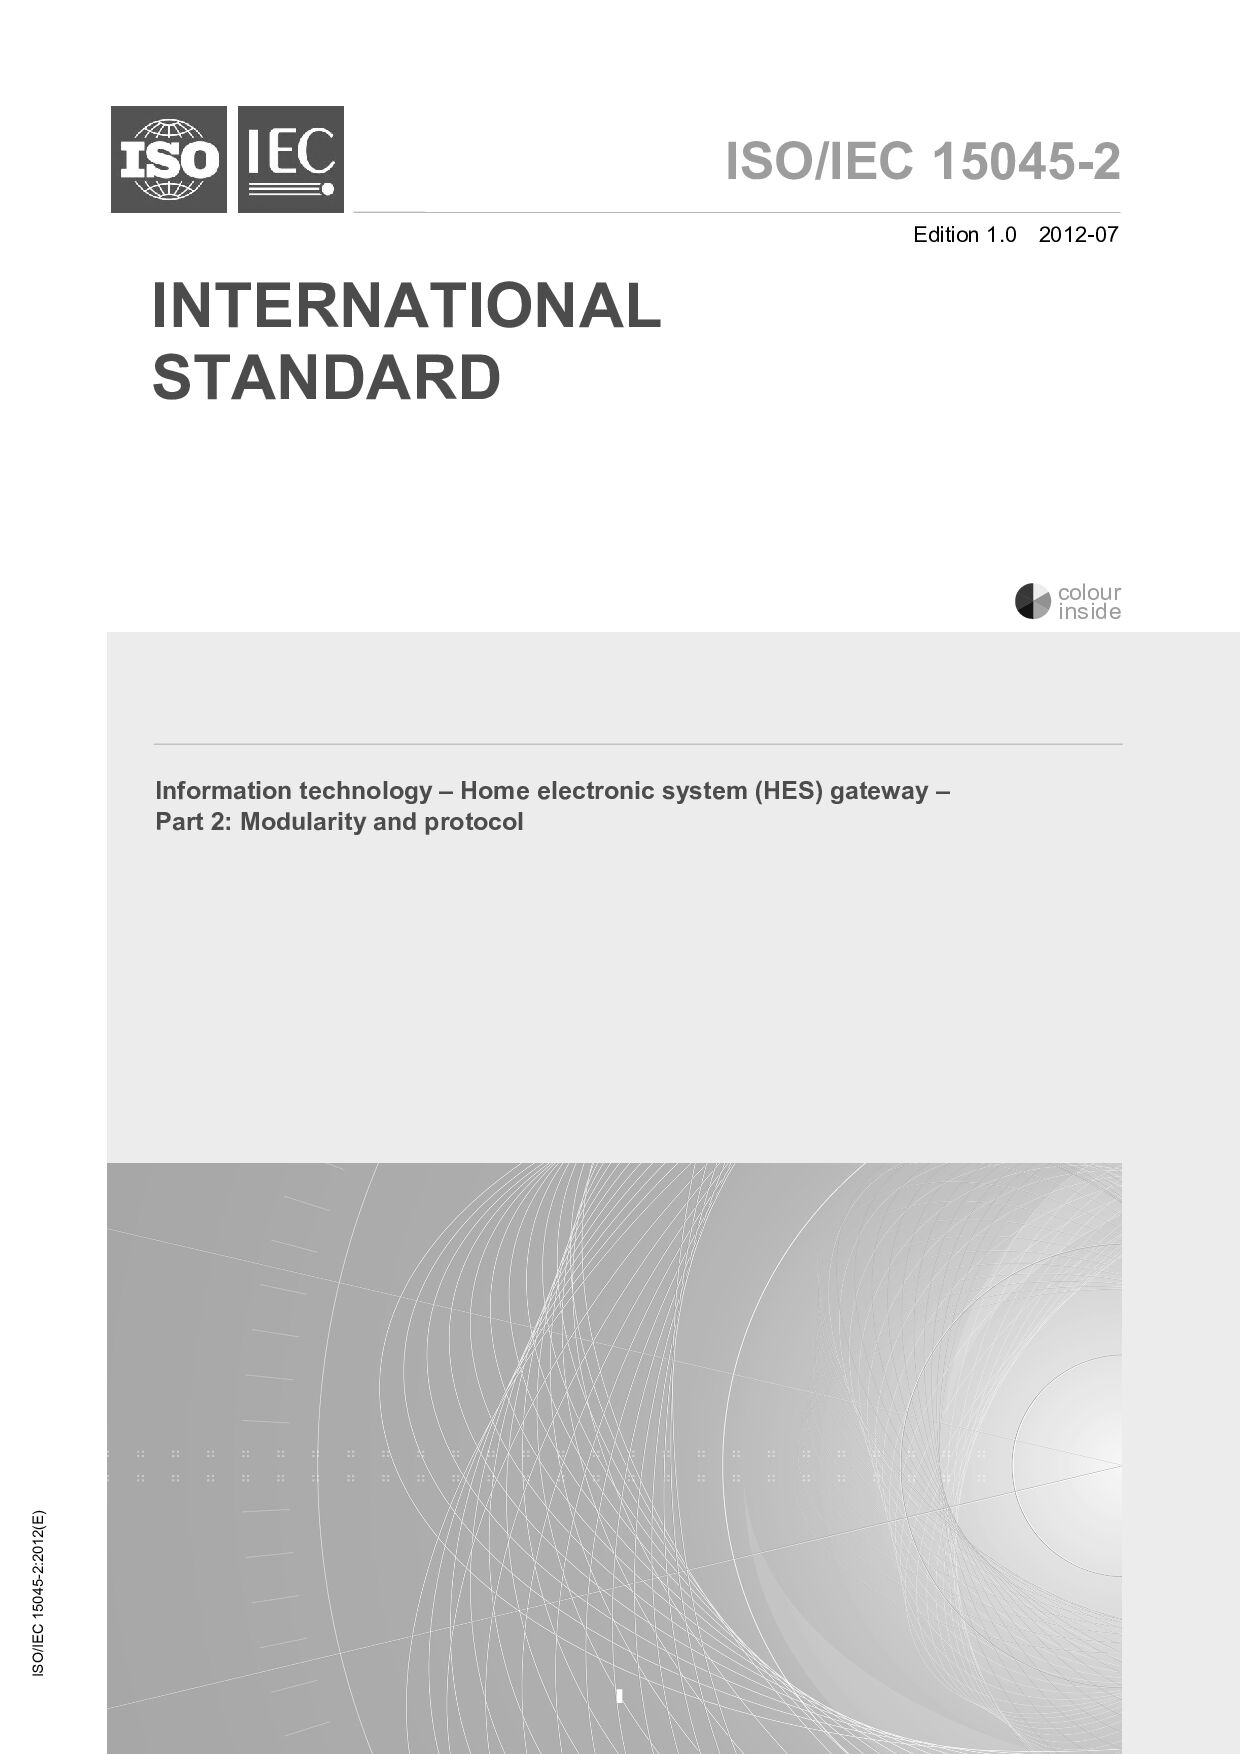 ISO/IEC 15045-2:2012